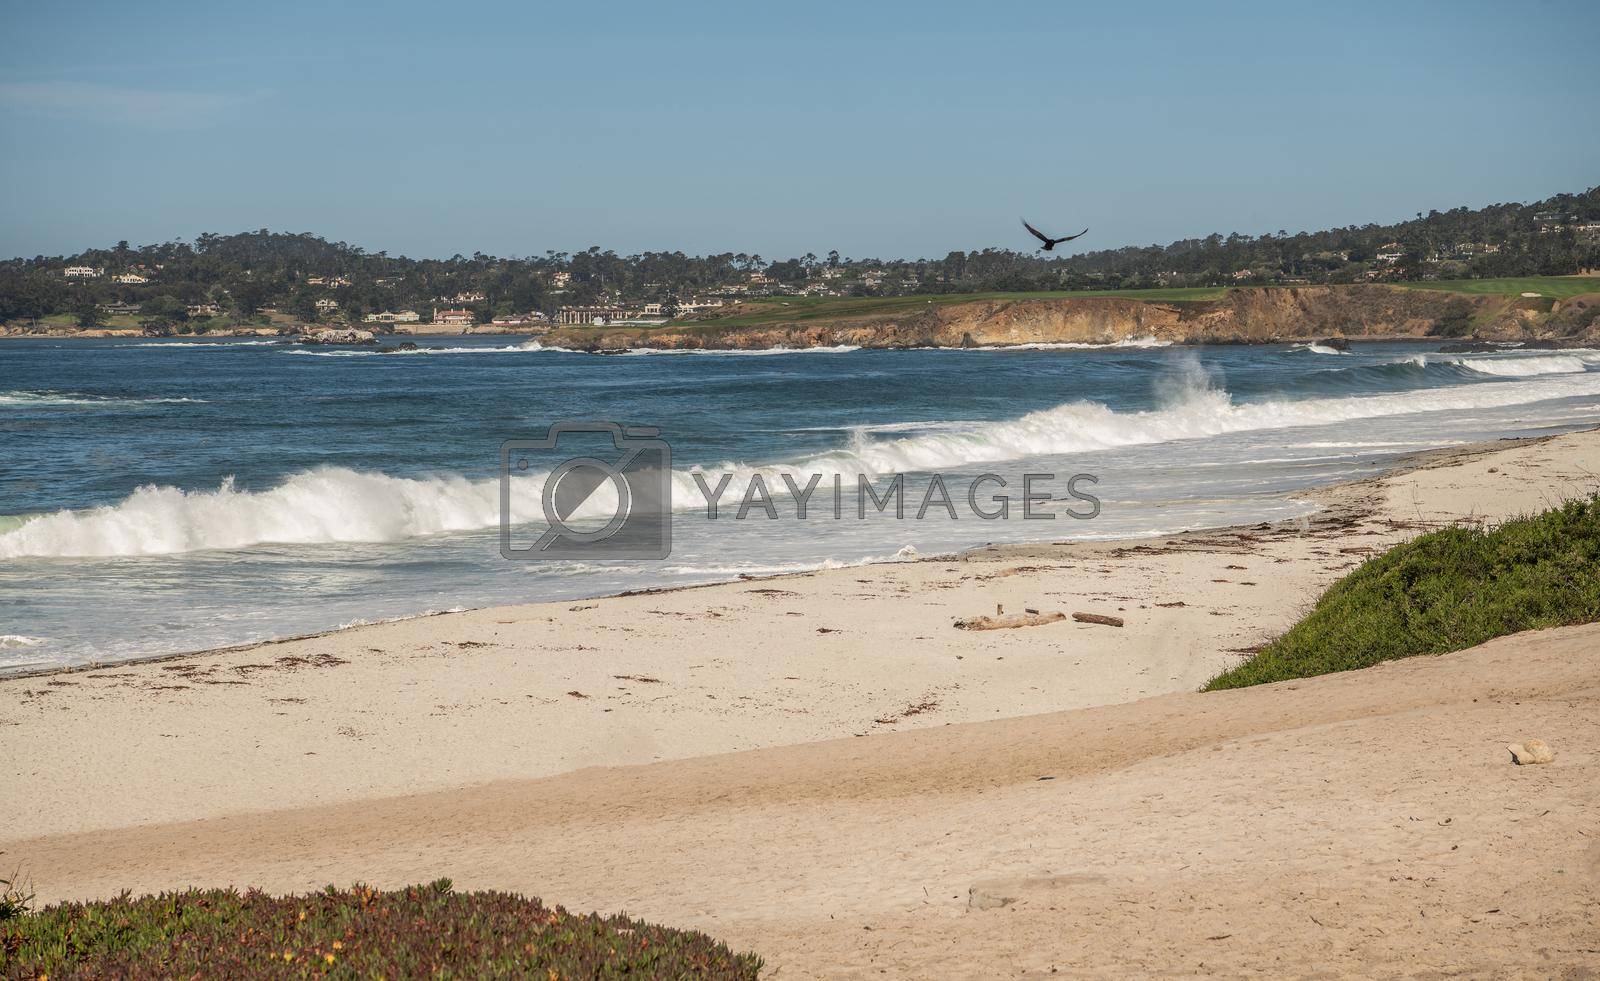 Royalty free image of Carmel California Beach by welcomia